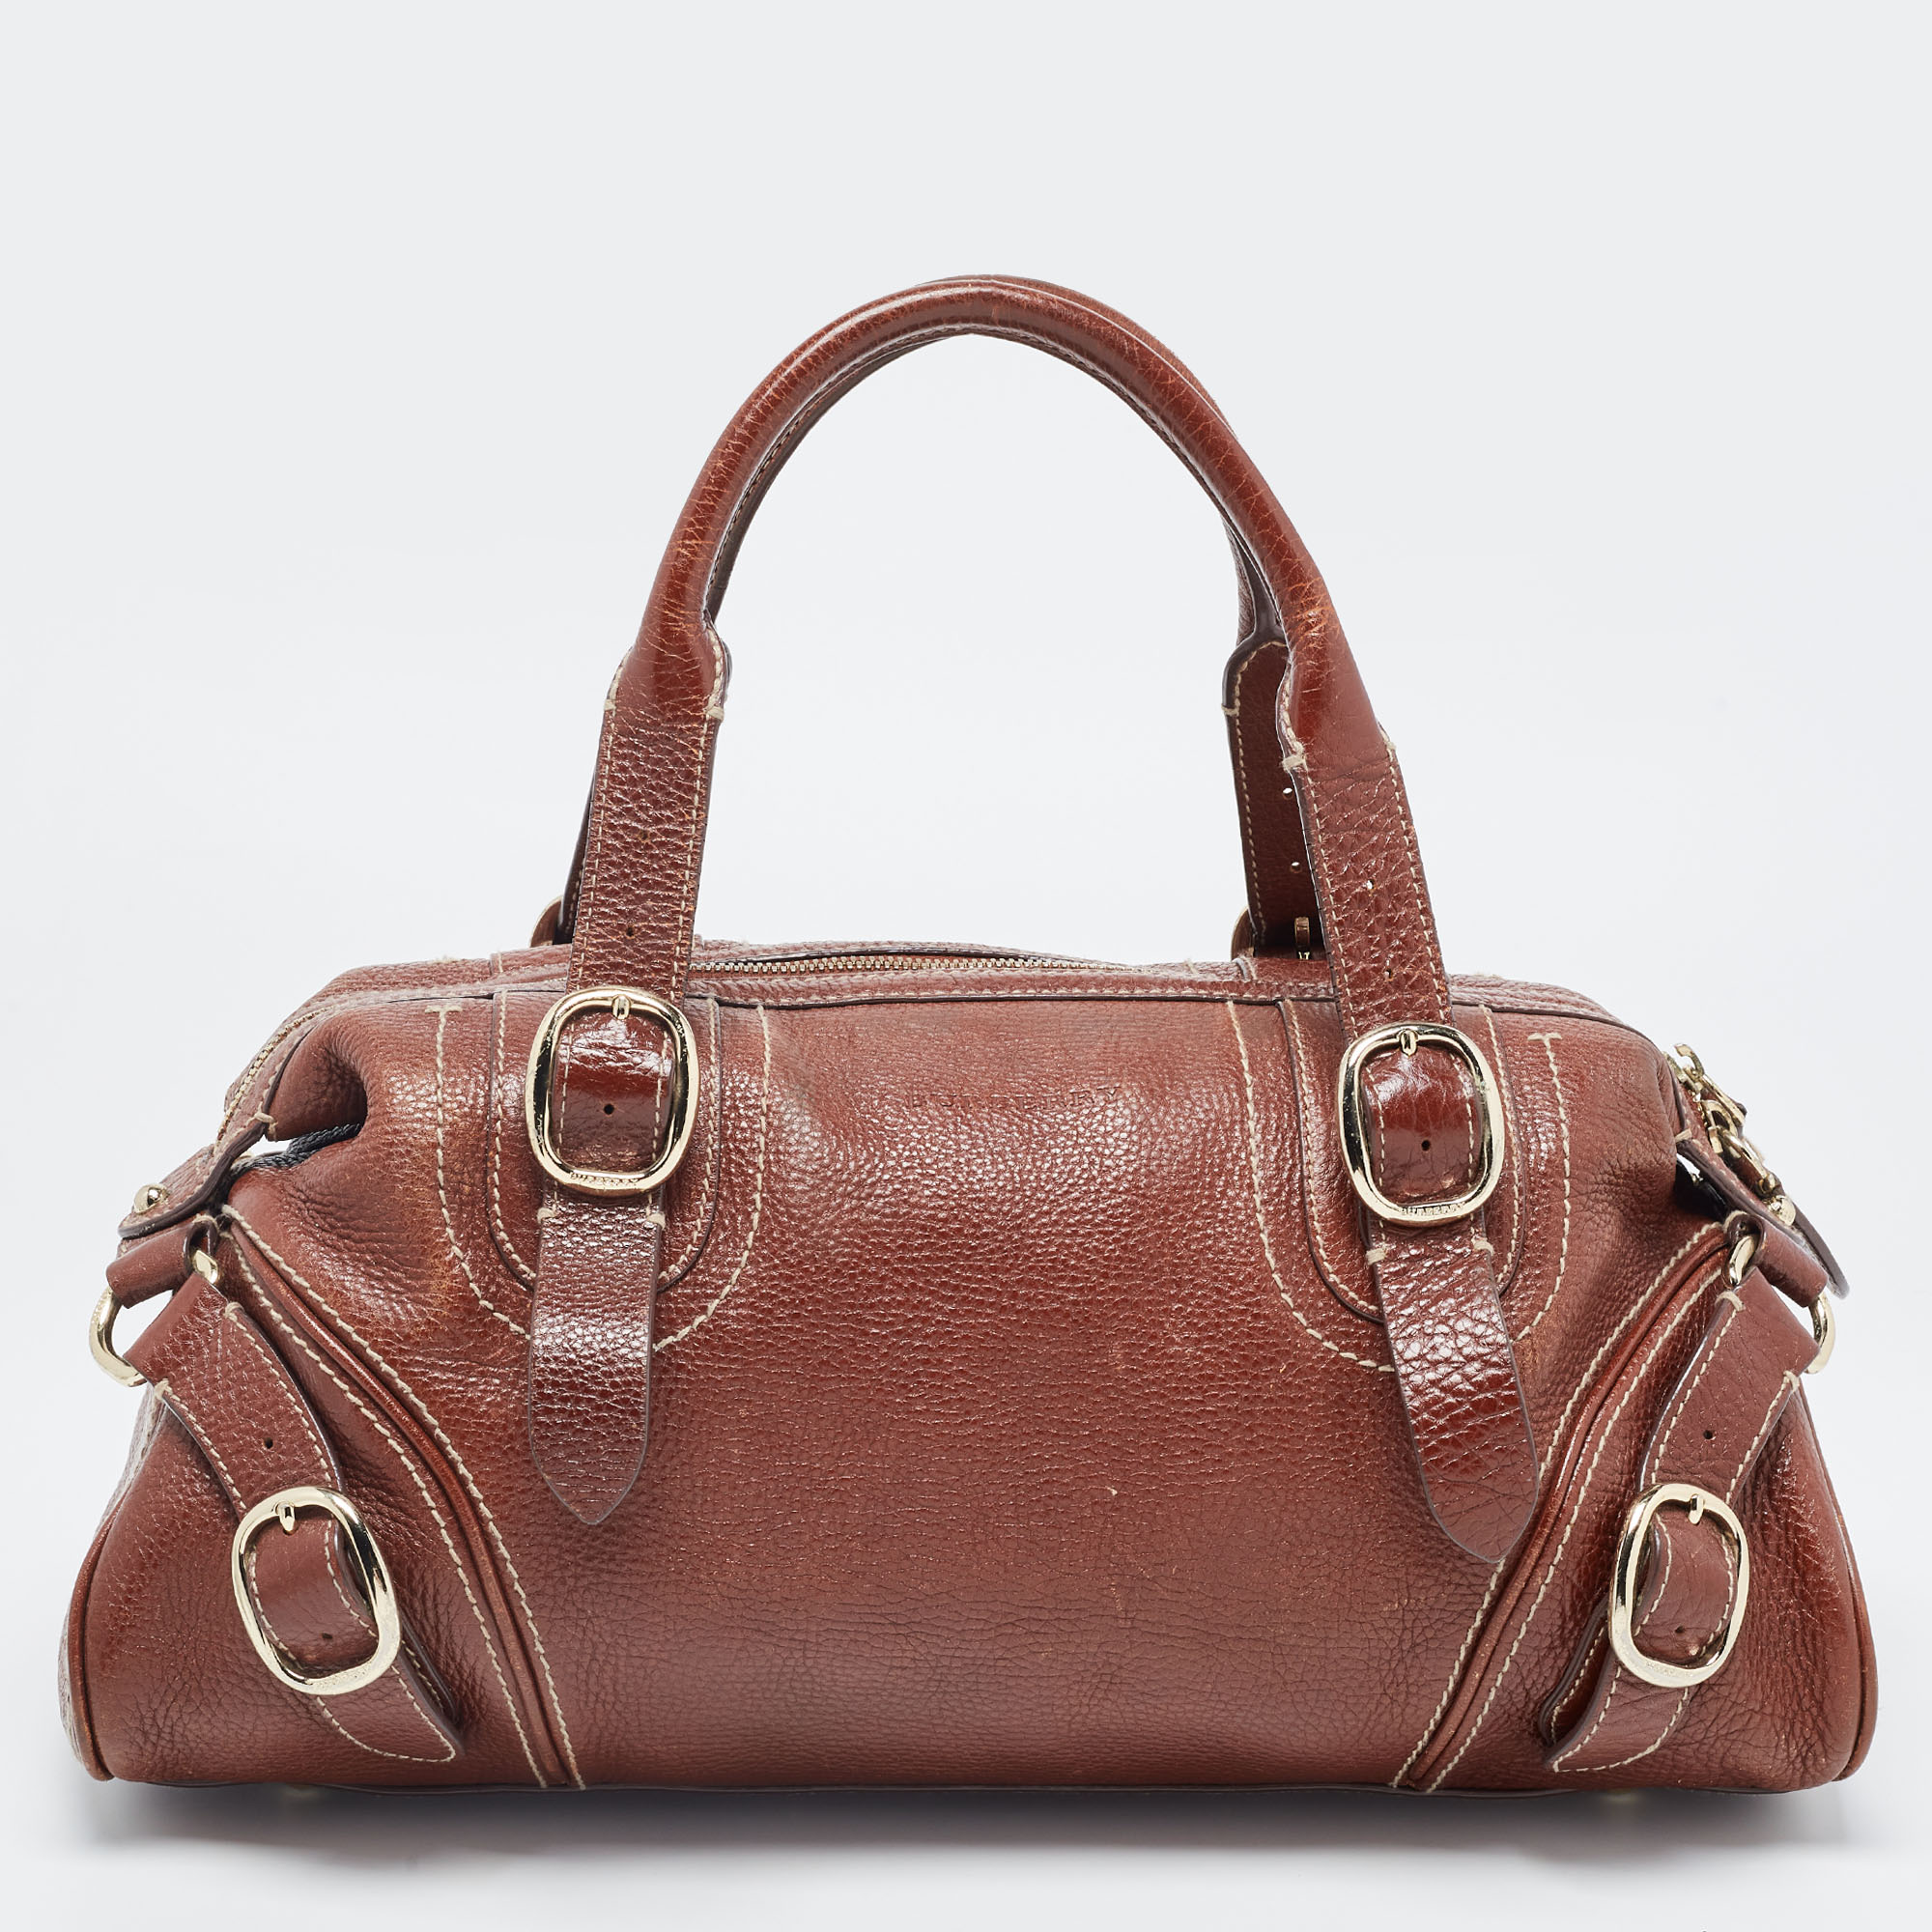 Burberry Brown Leather Bowler Bag